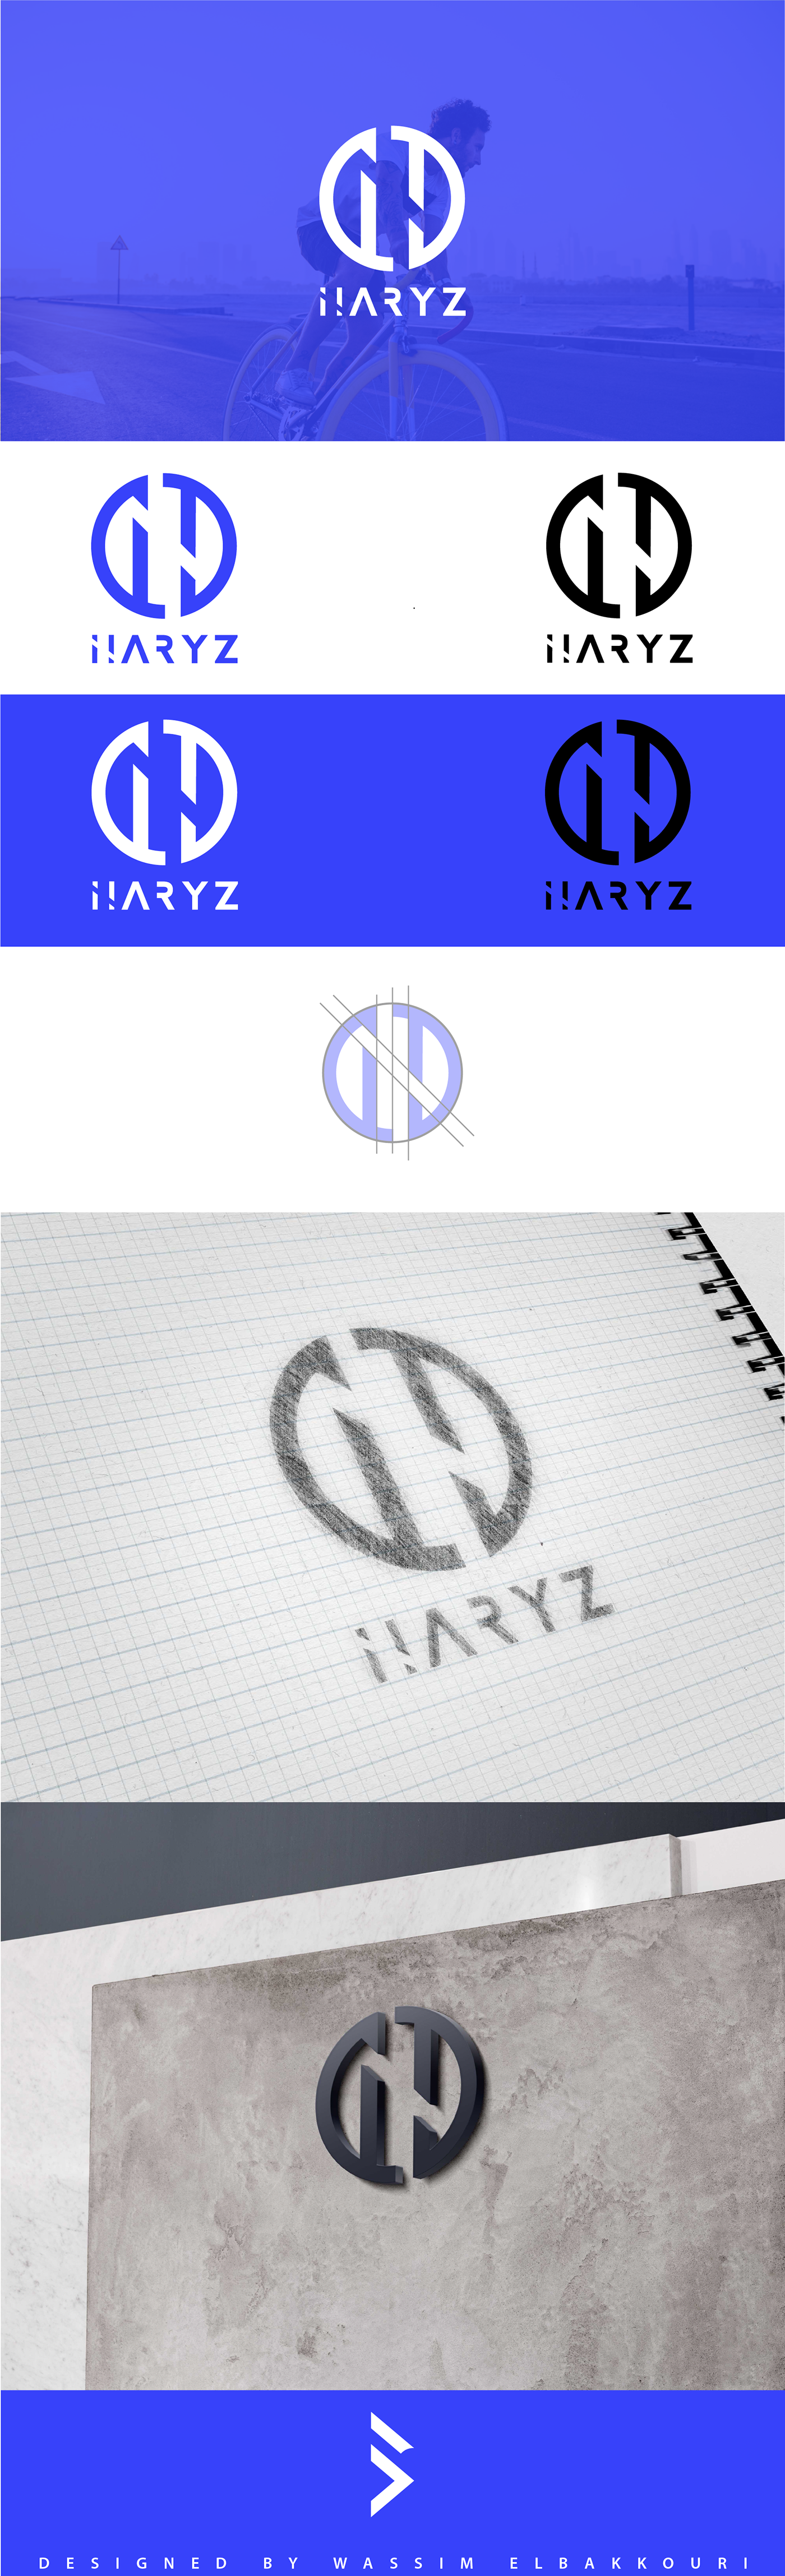 logo blue White insperation store identity branding  new creative simple